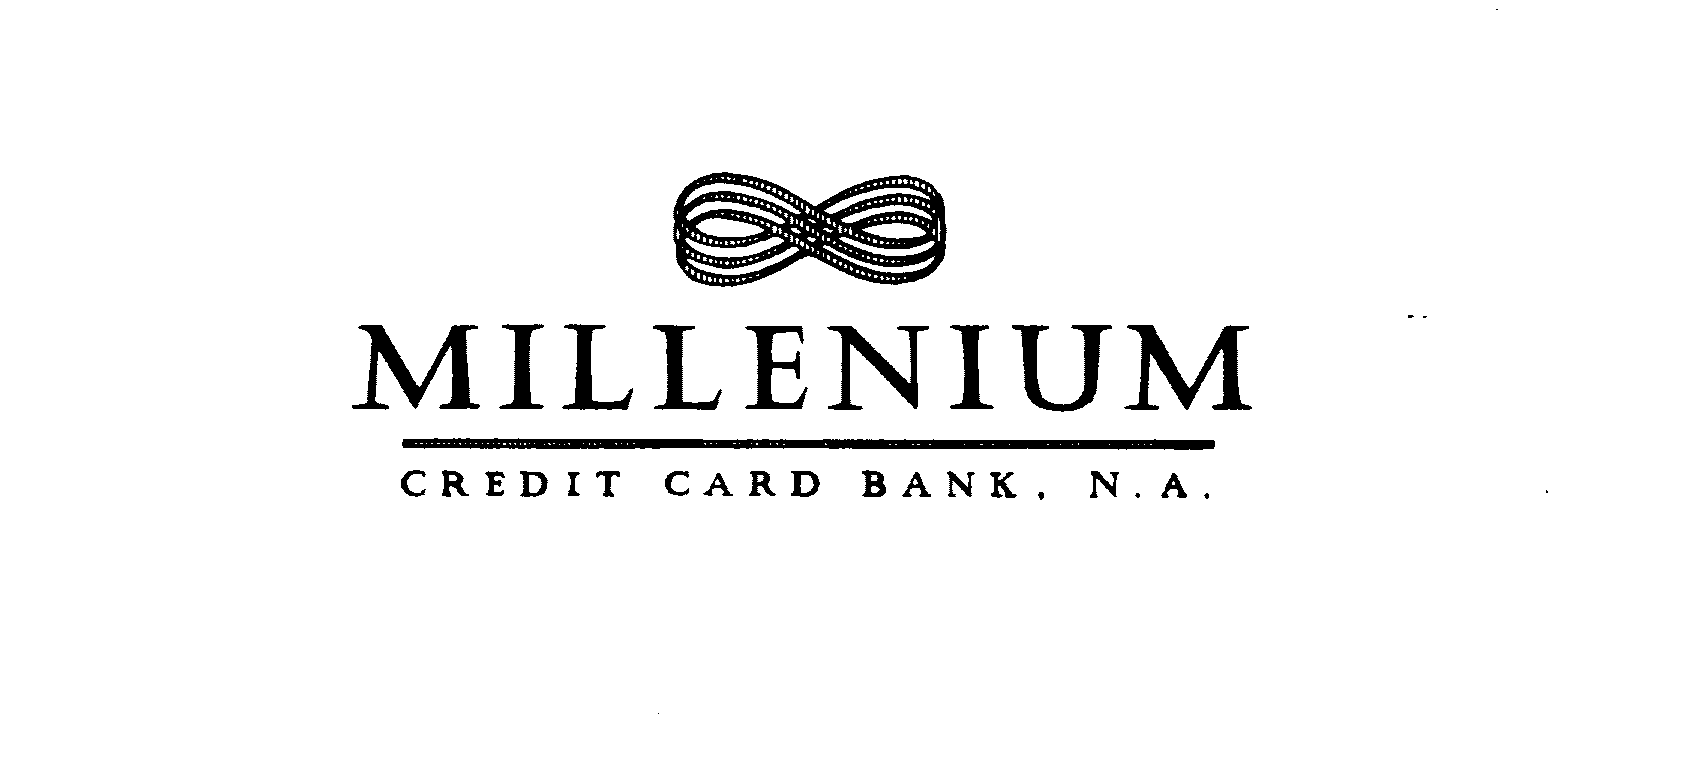  MILLENNIUM CREDIT CARD BANK, N.A.